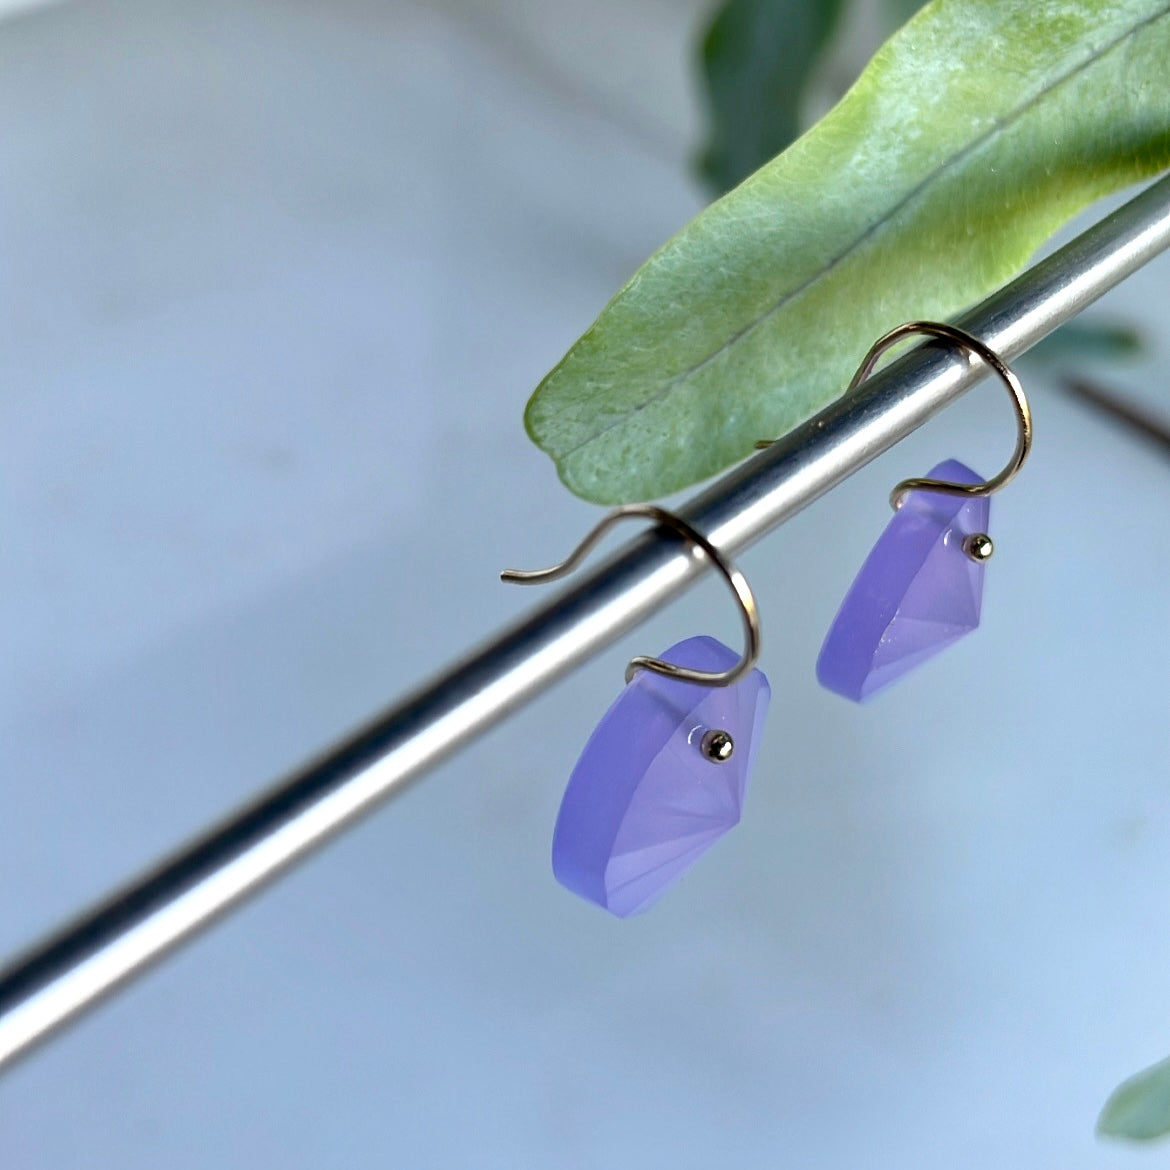 Petite Dial lavender chalcedony earrings-serena kojimoto studio